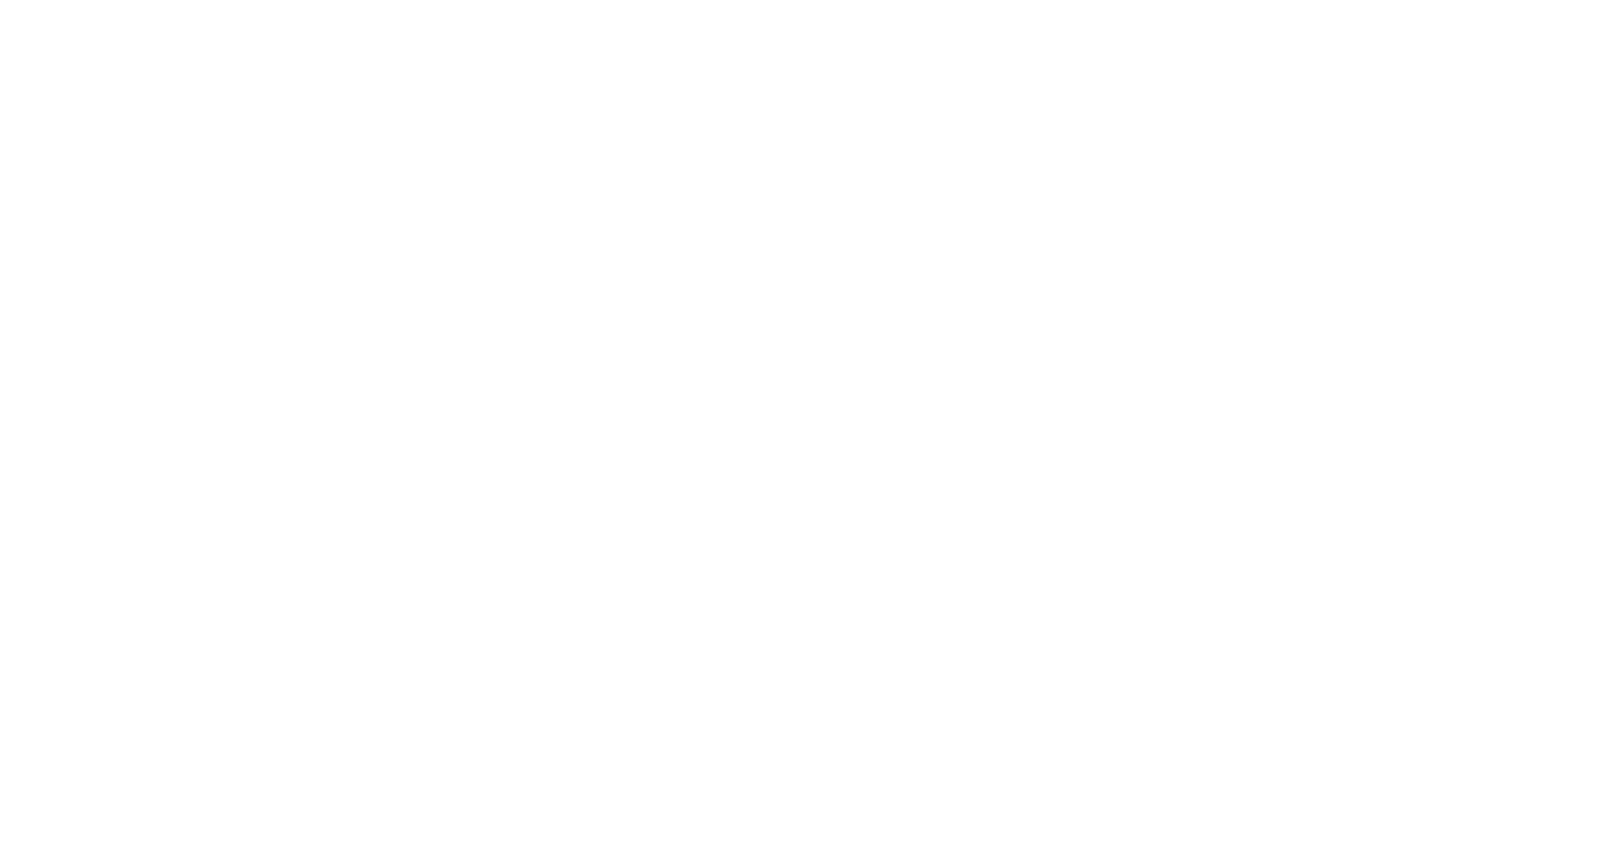 Vitalis Sportstudio | Fitness | Trainingskurse | Langelsheim